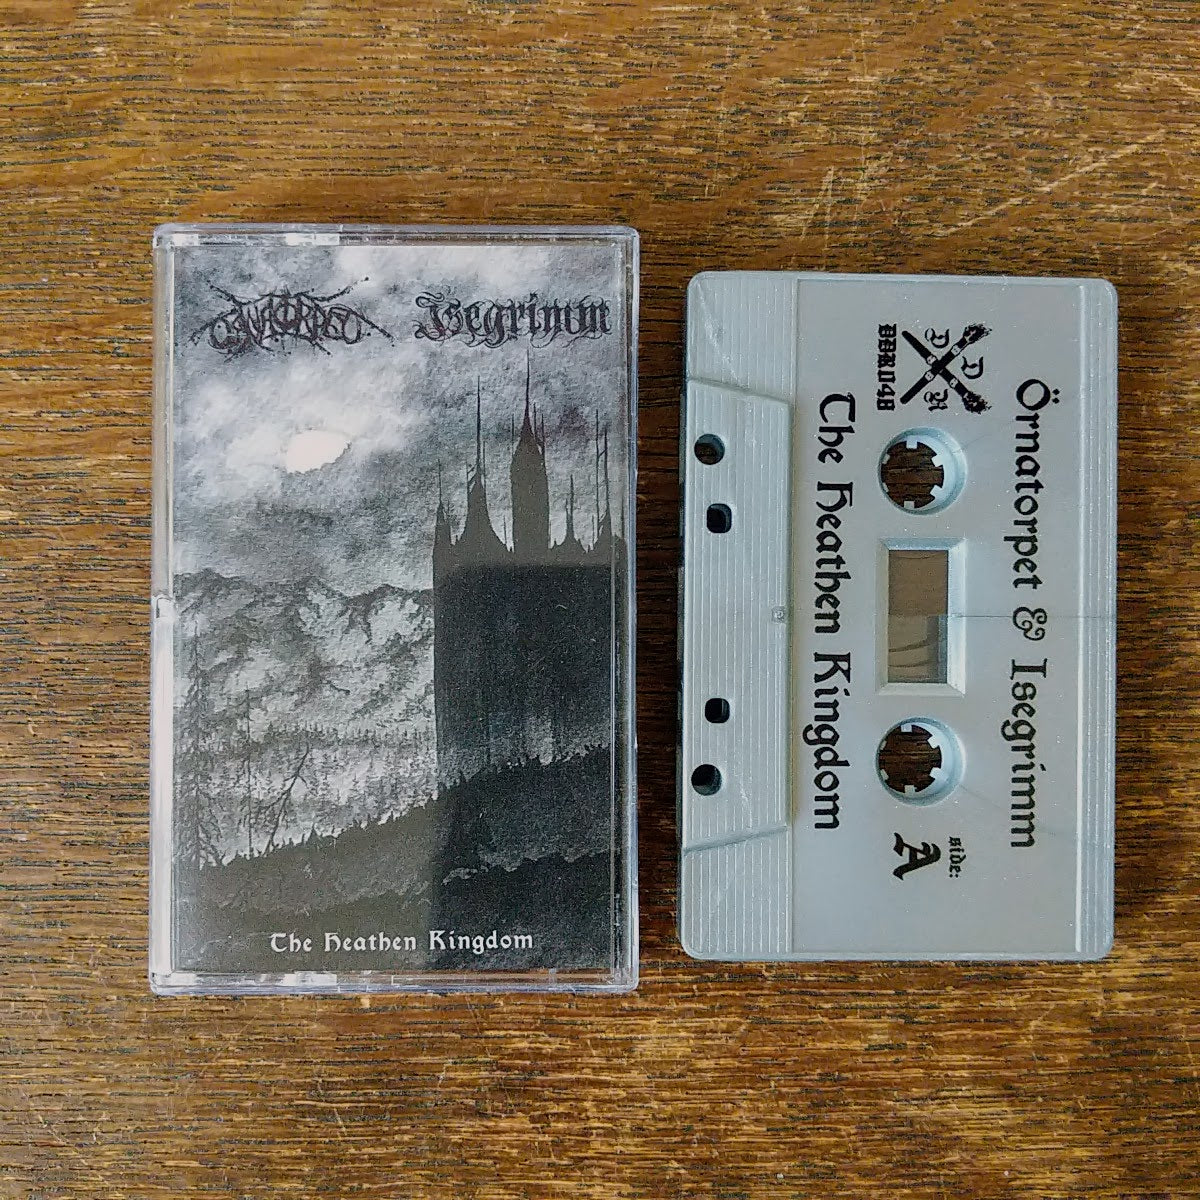 [SOLD OUT] ISEGRIMM / ÖRNATORPET "The Heathen Kingdom" split Cassette Tape